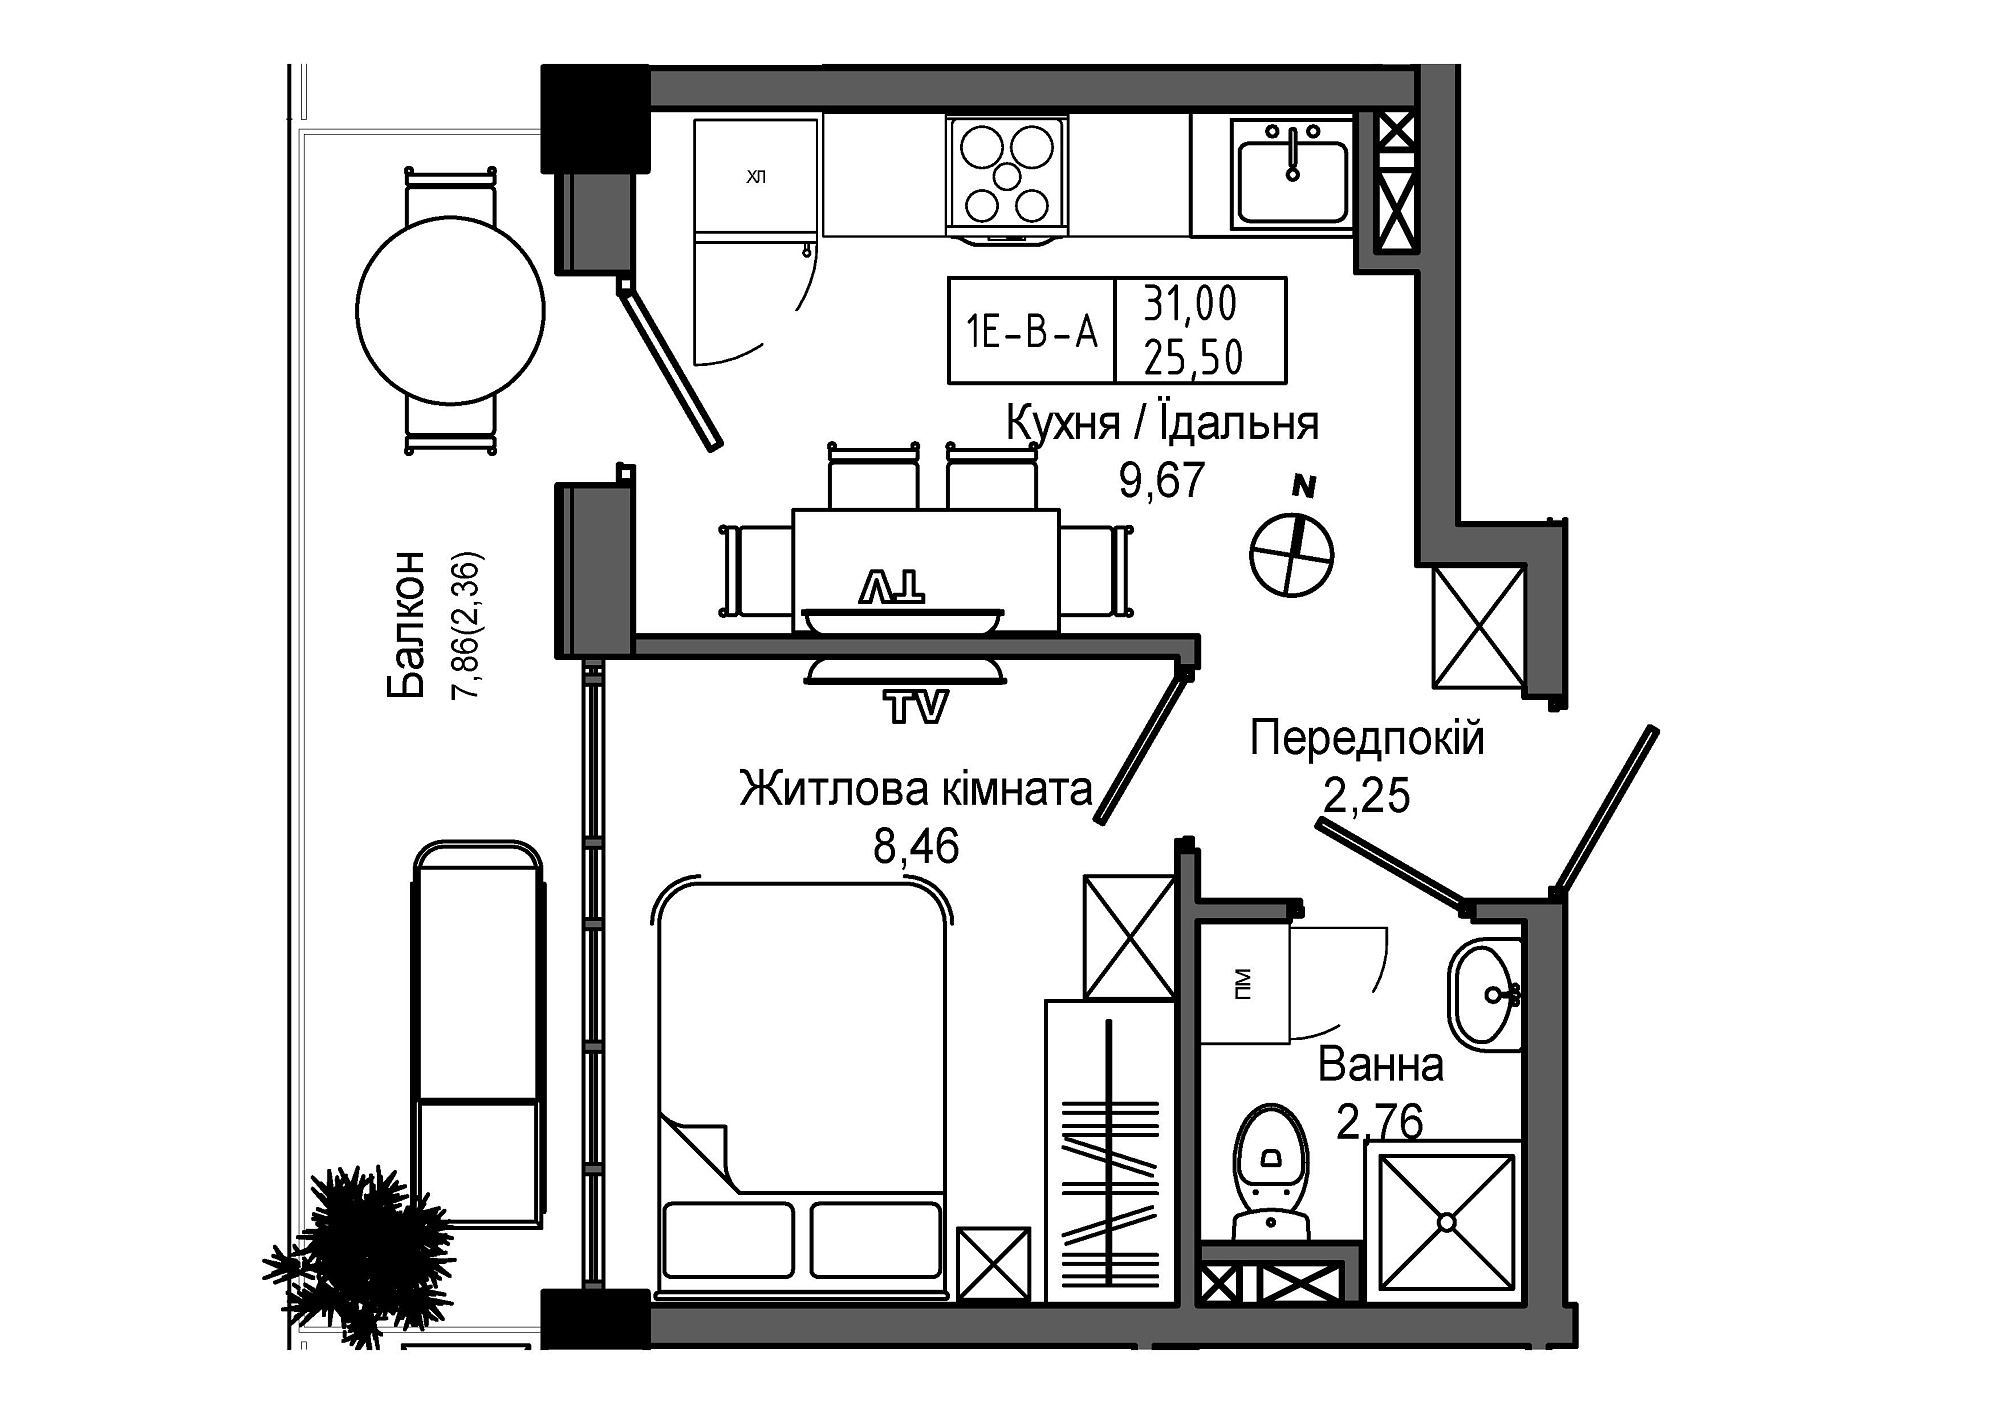 Планування 1-к квартира площею 25.5м2, UM-006-04/0008.